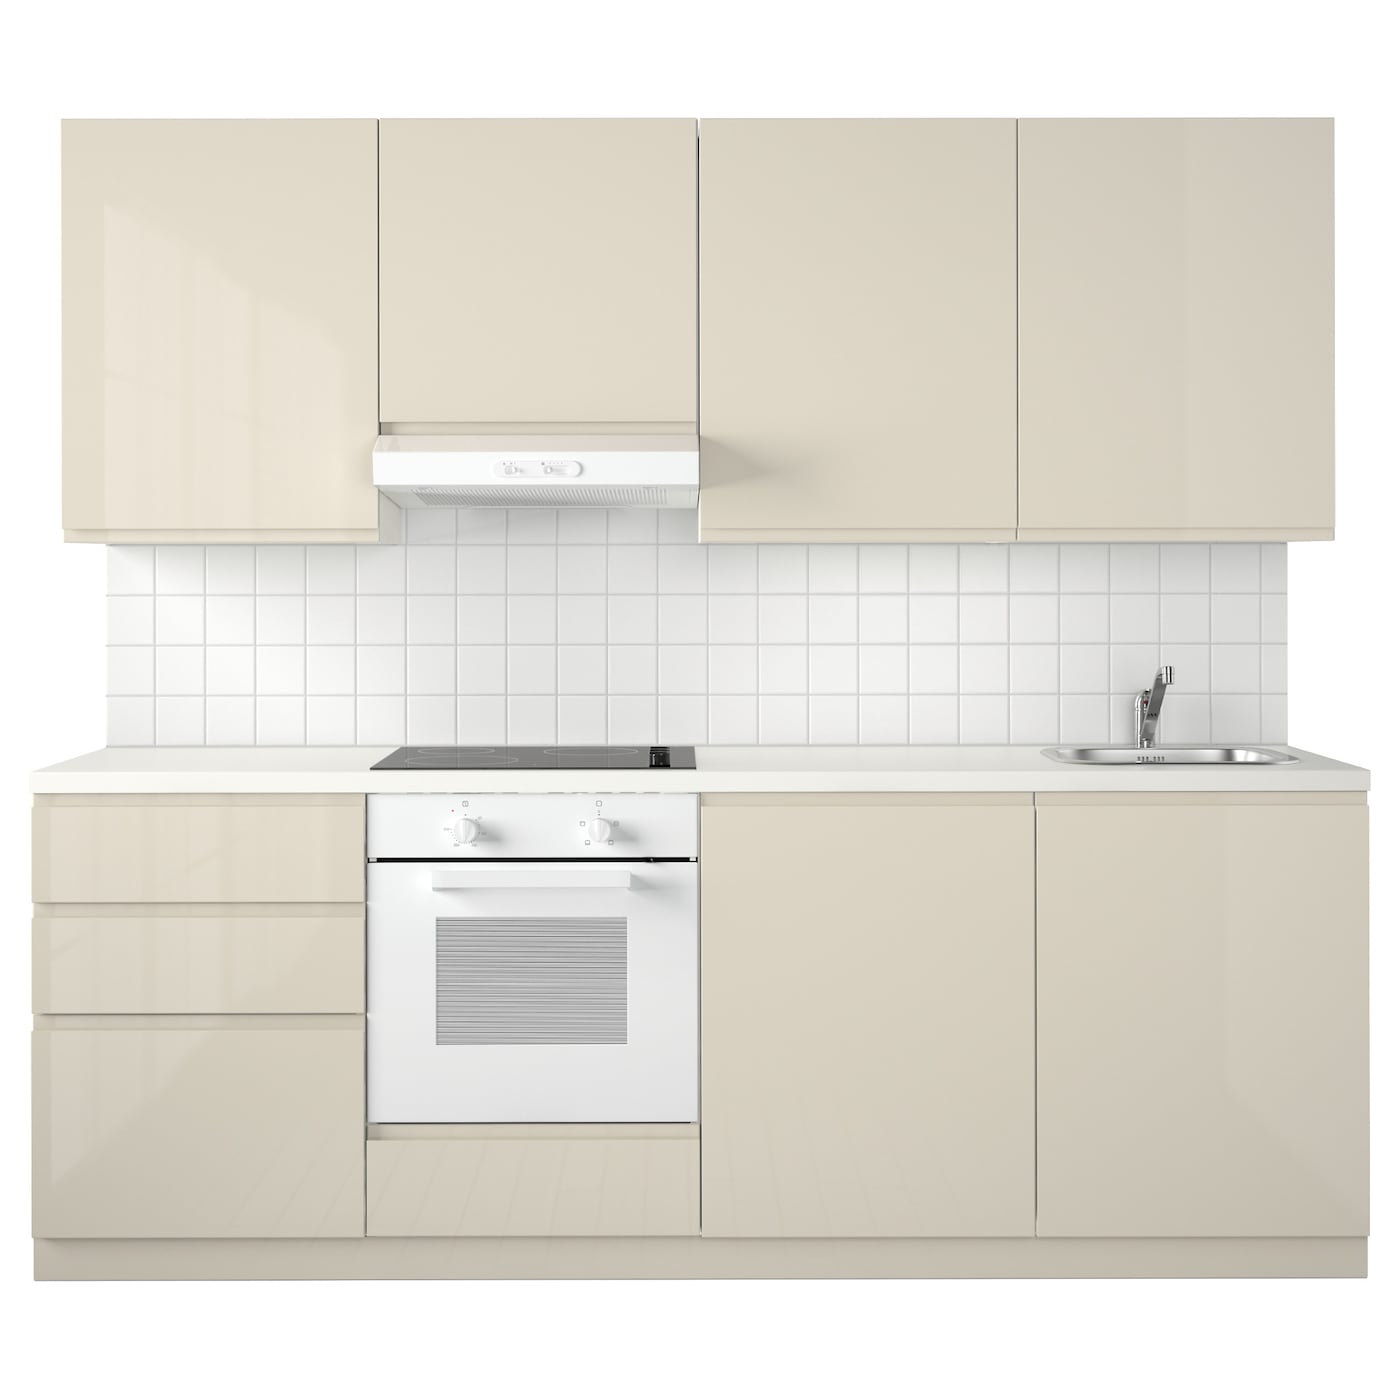 Модульный шкаф - METOD IKEA/ МЕТОД ИКЕА, 228х240 см, светло-бежевый/белый